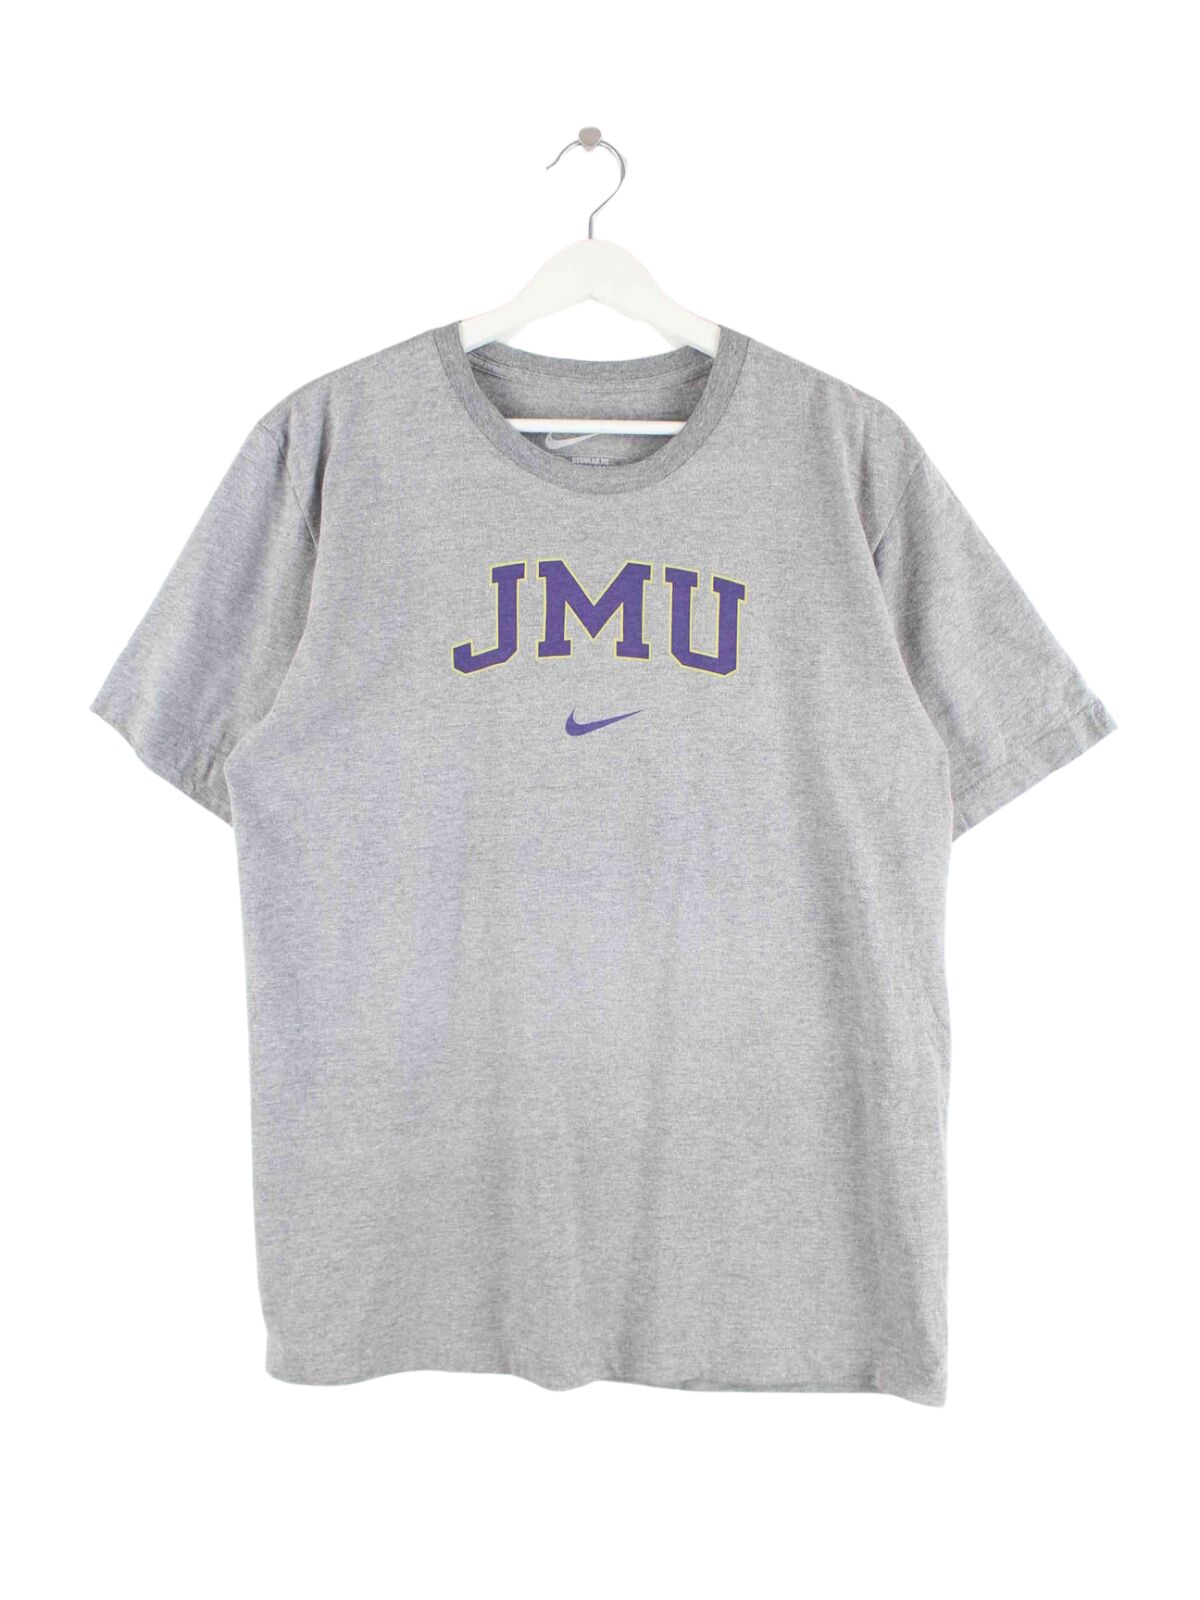 Nike JMU Center Swoosh T-Shirt Grau M (front image)